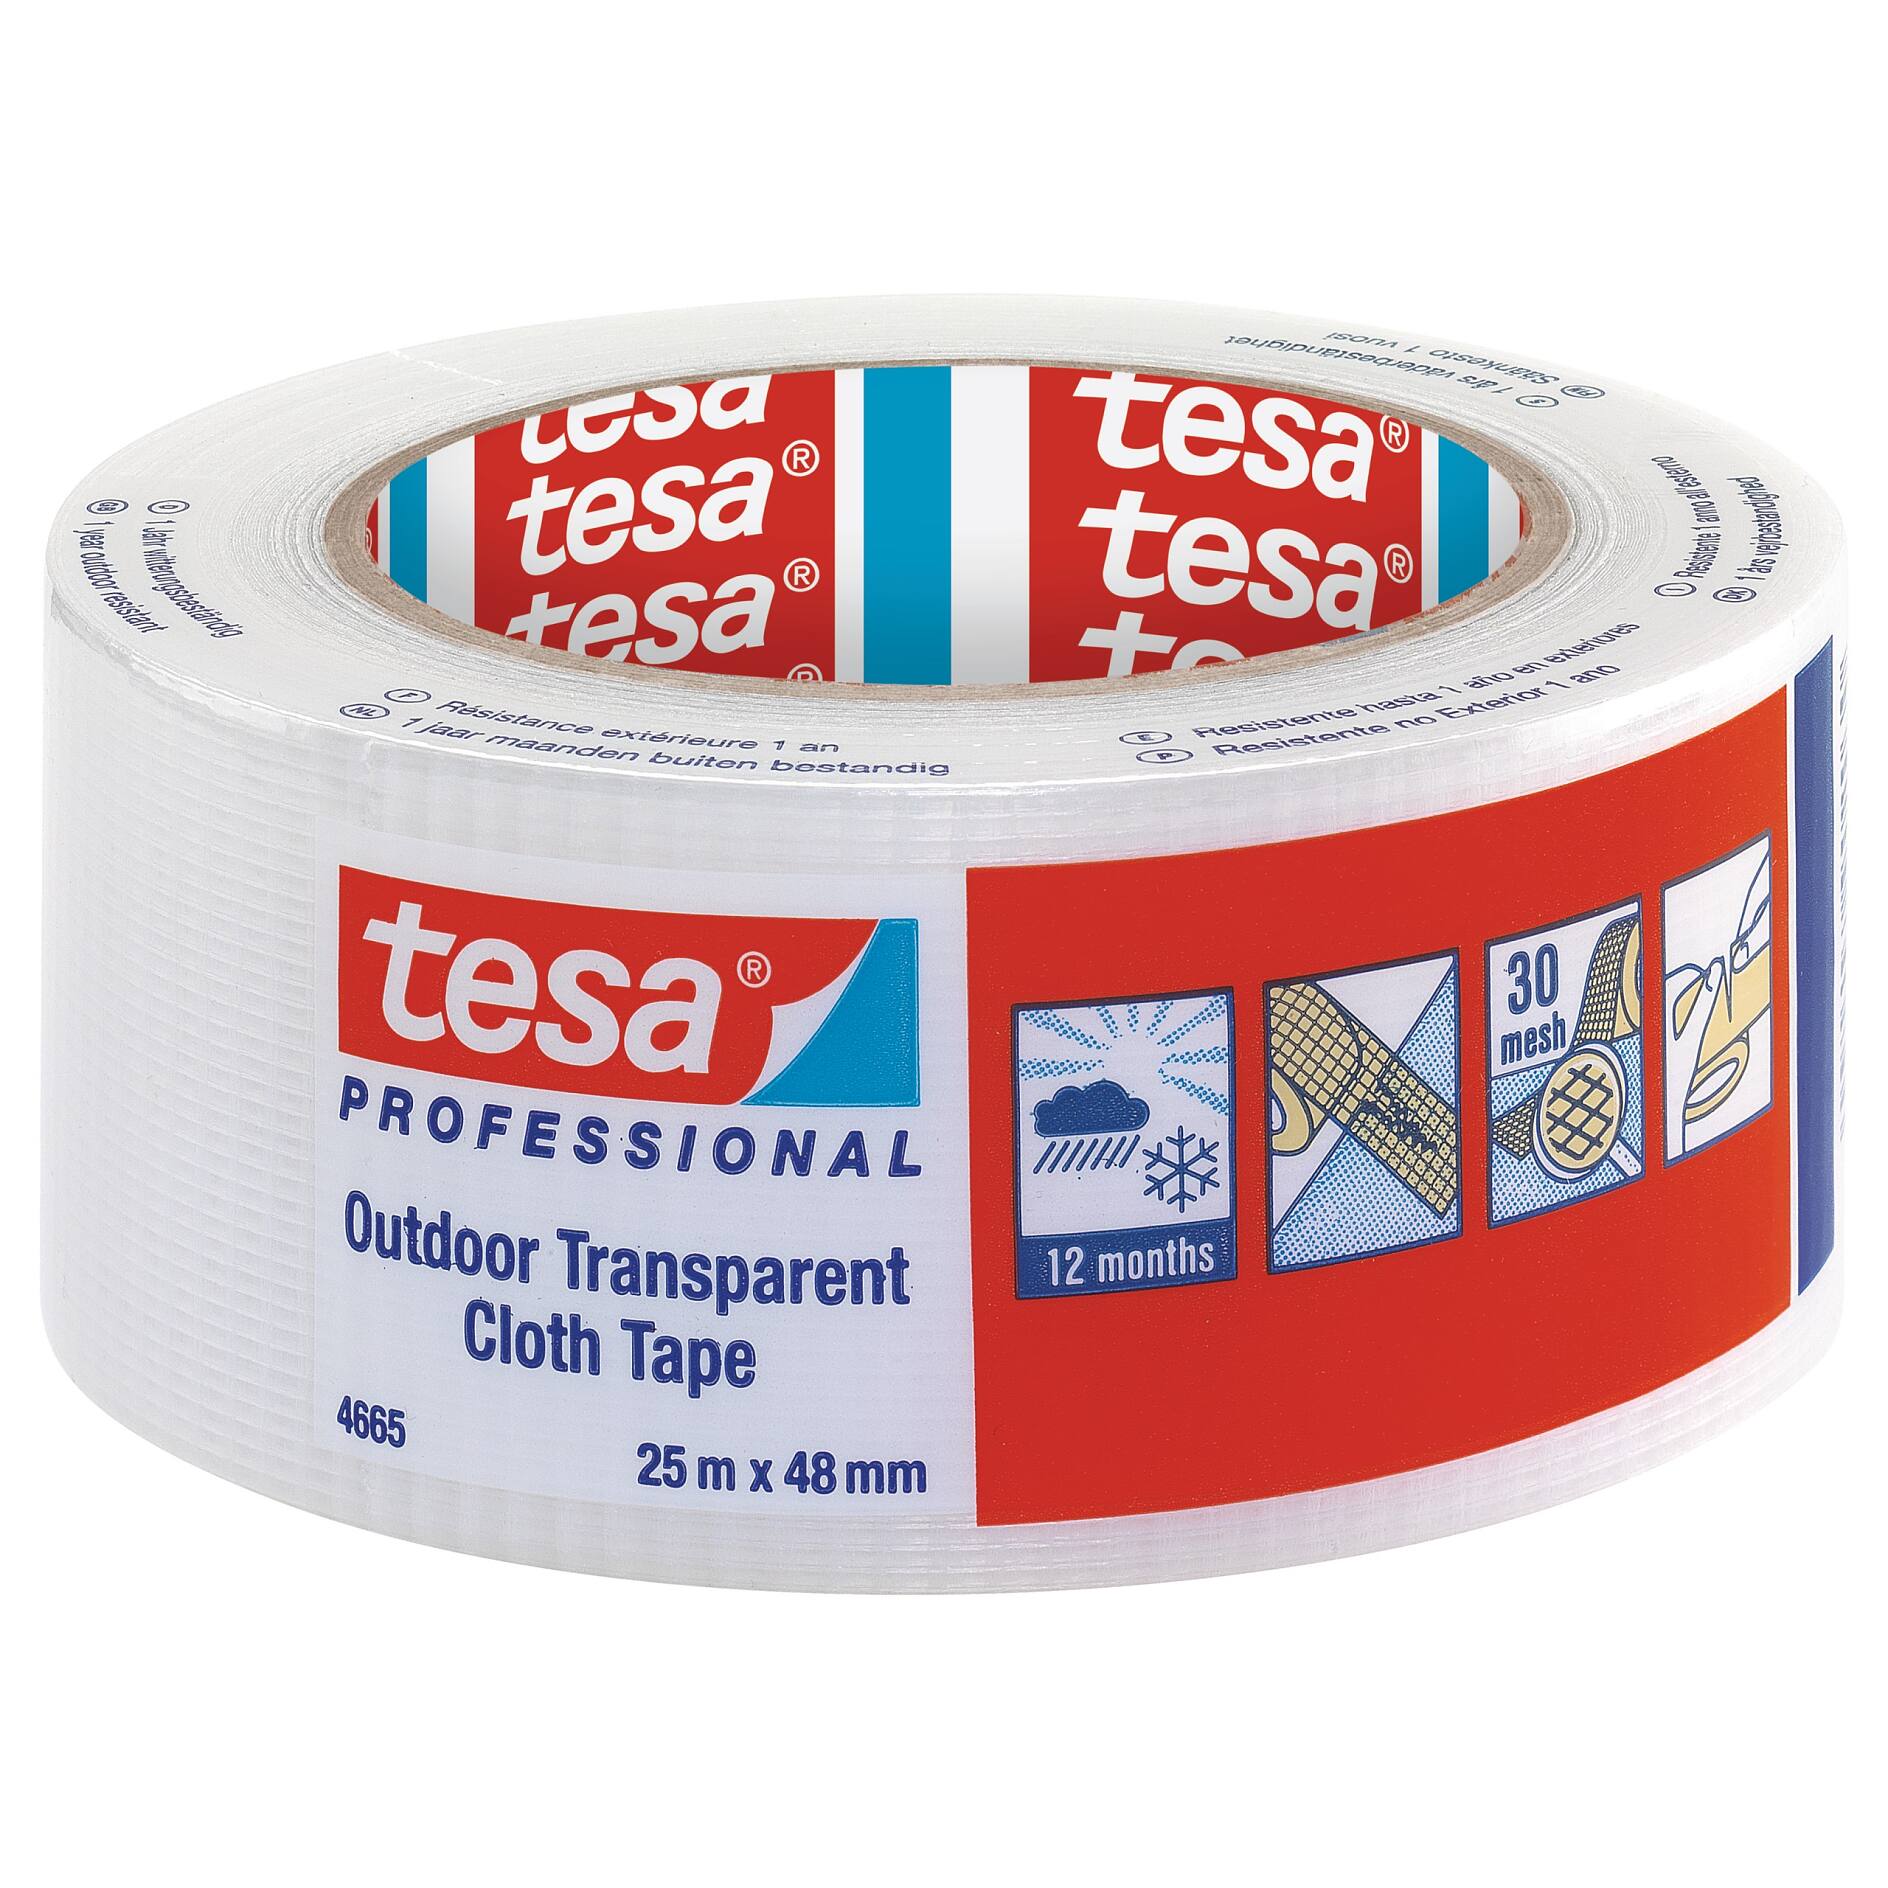 tesa® Professional 4325 Masking Tape Pro White - tesa